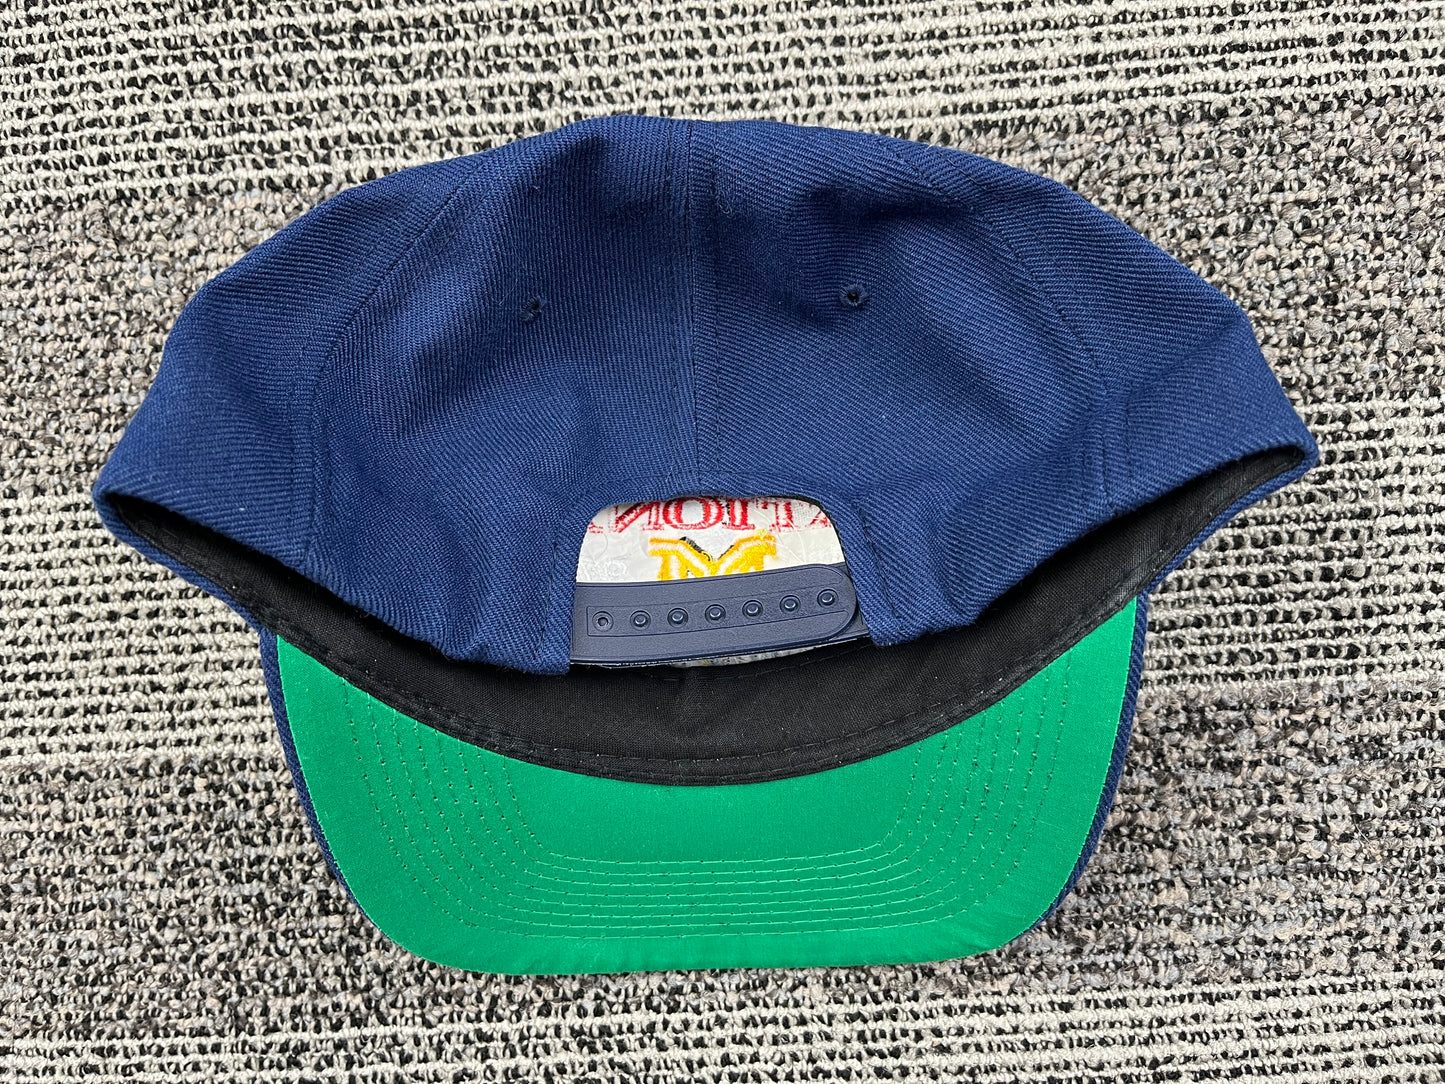 Michigan 1997 National Champs Snap-Back Hat